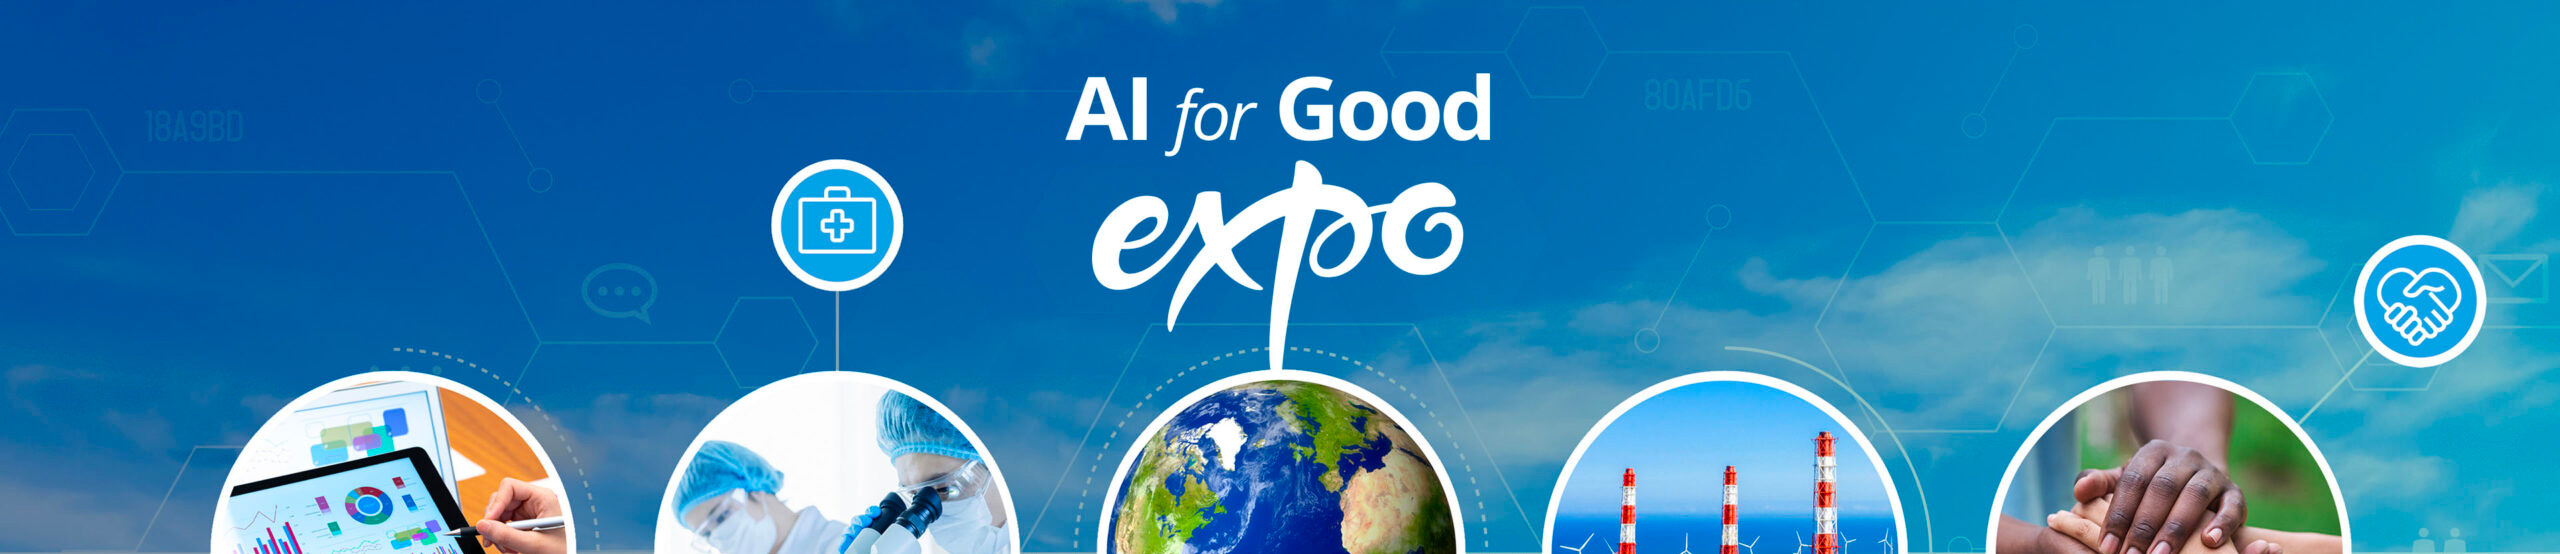 AI for Good Expo